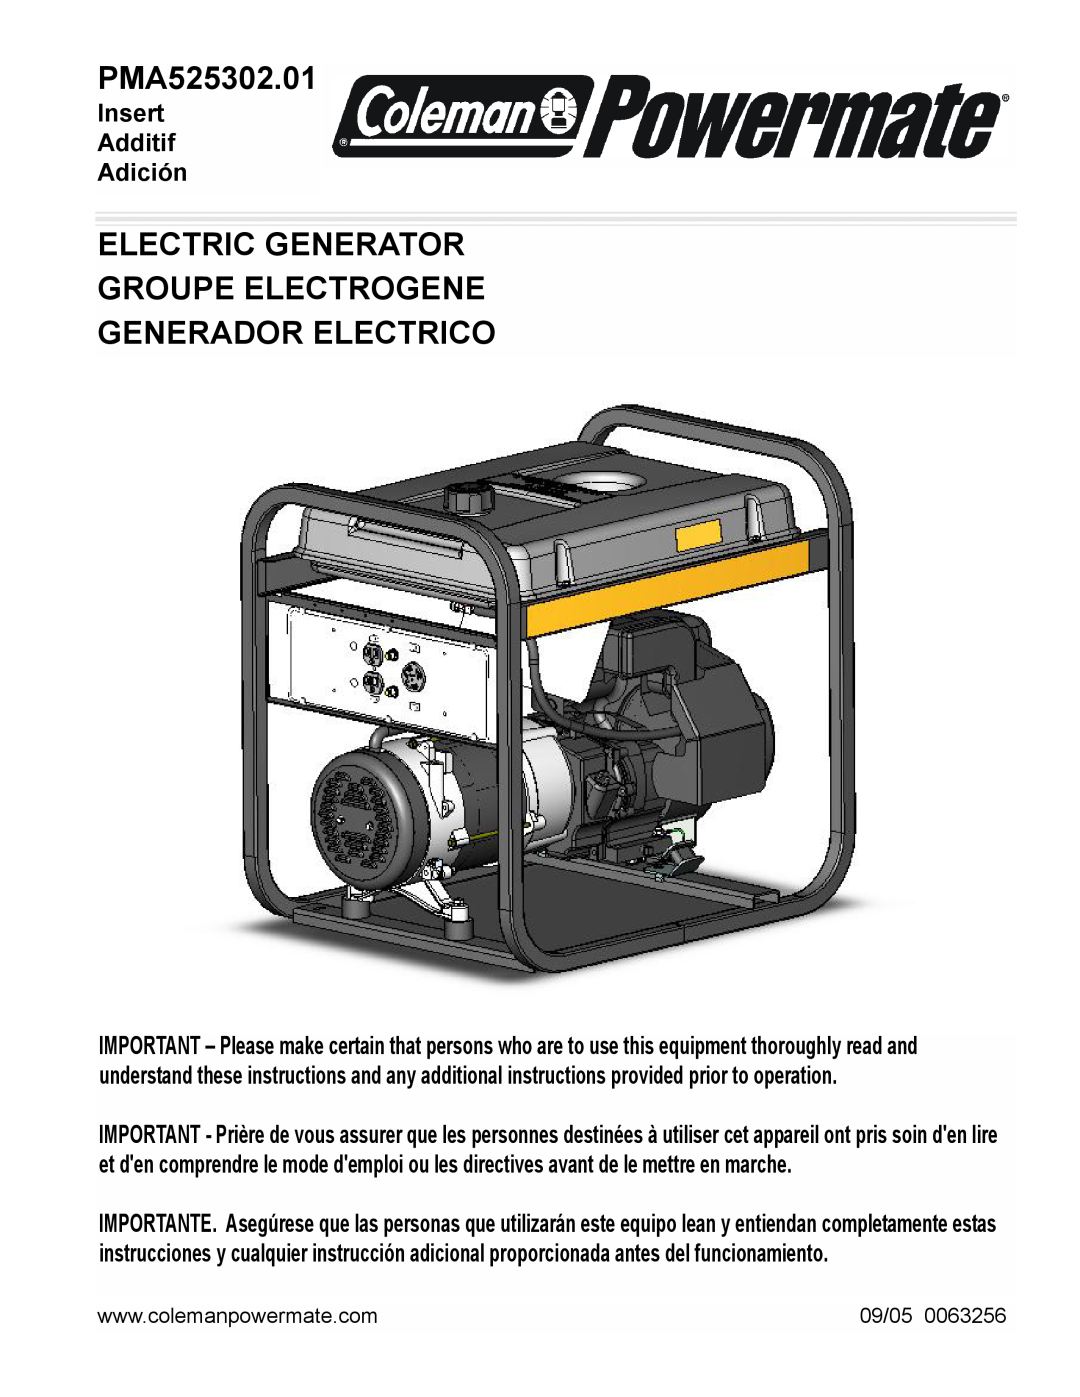 Powermate PMA525302.01 manual Electric Generator Groupe Electrogene, Generador Electrico, Insert Additif Adición, 09/05 